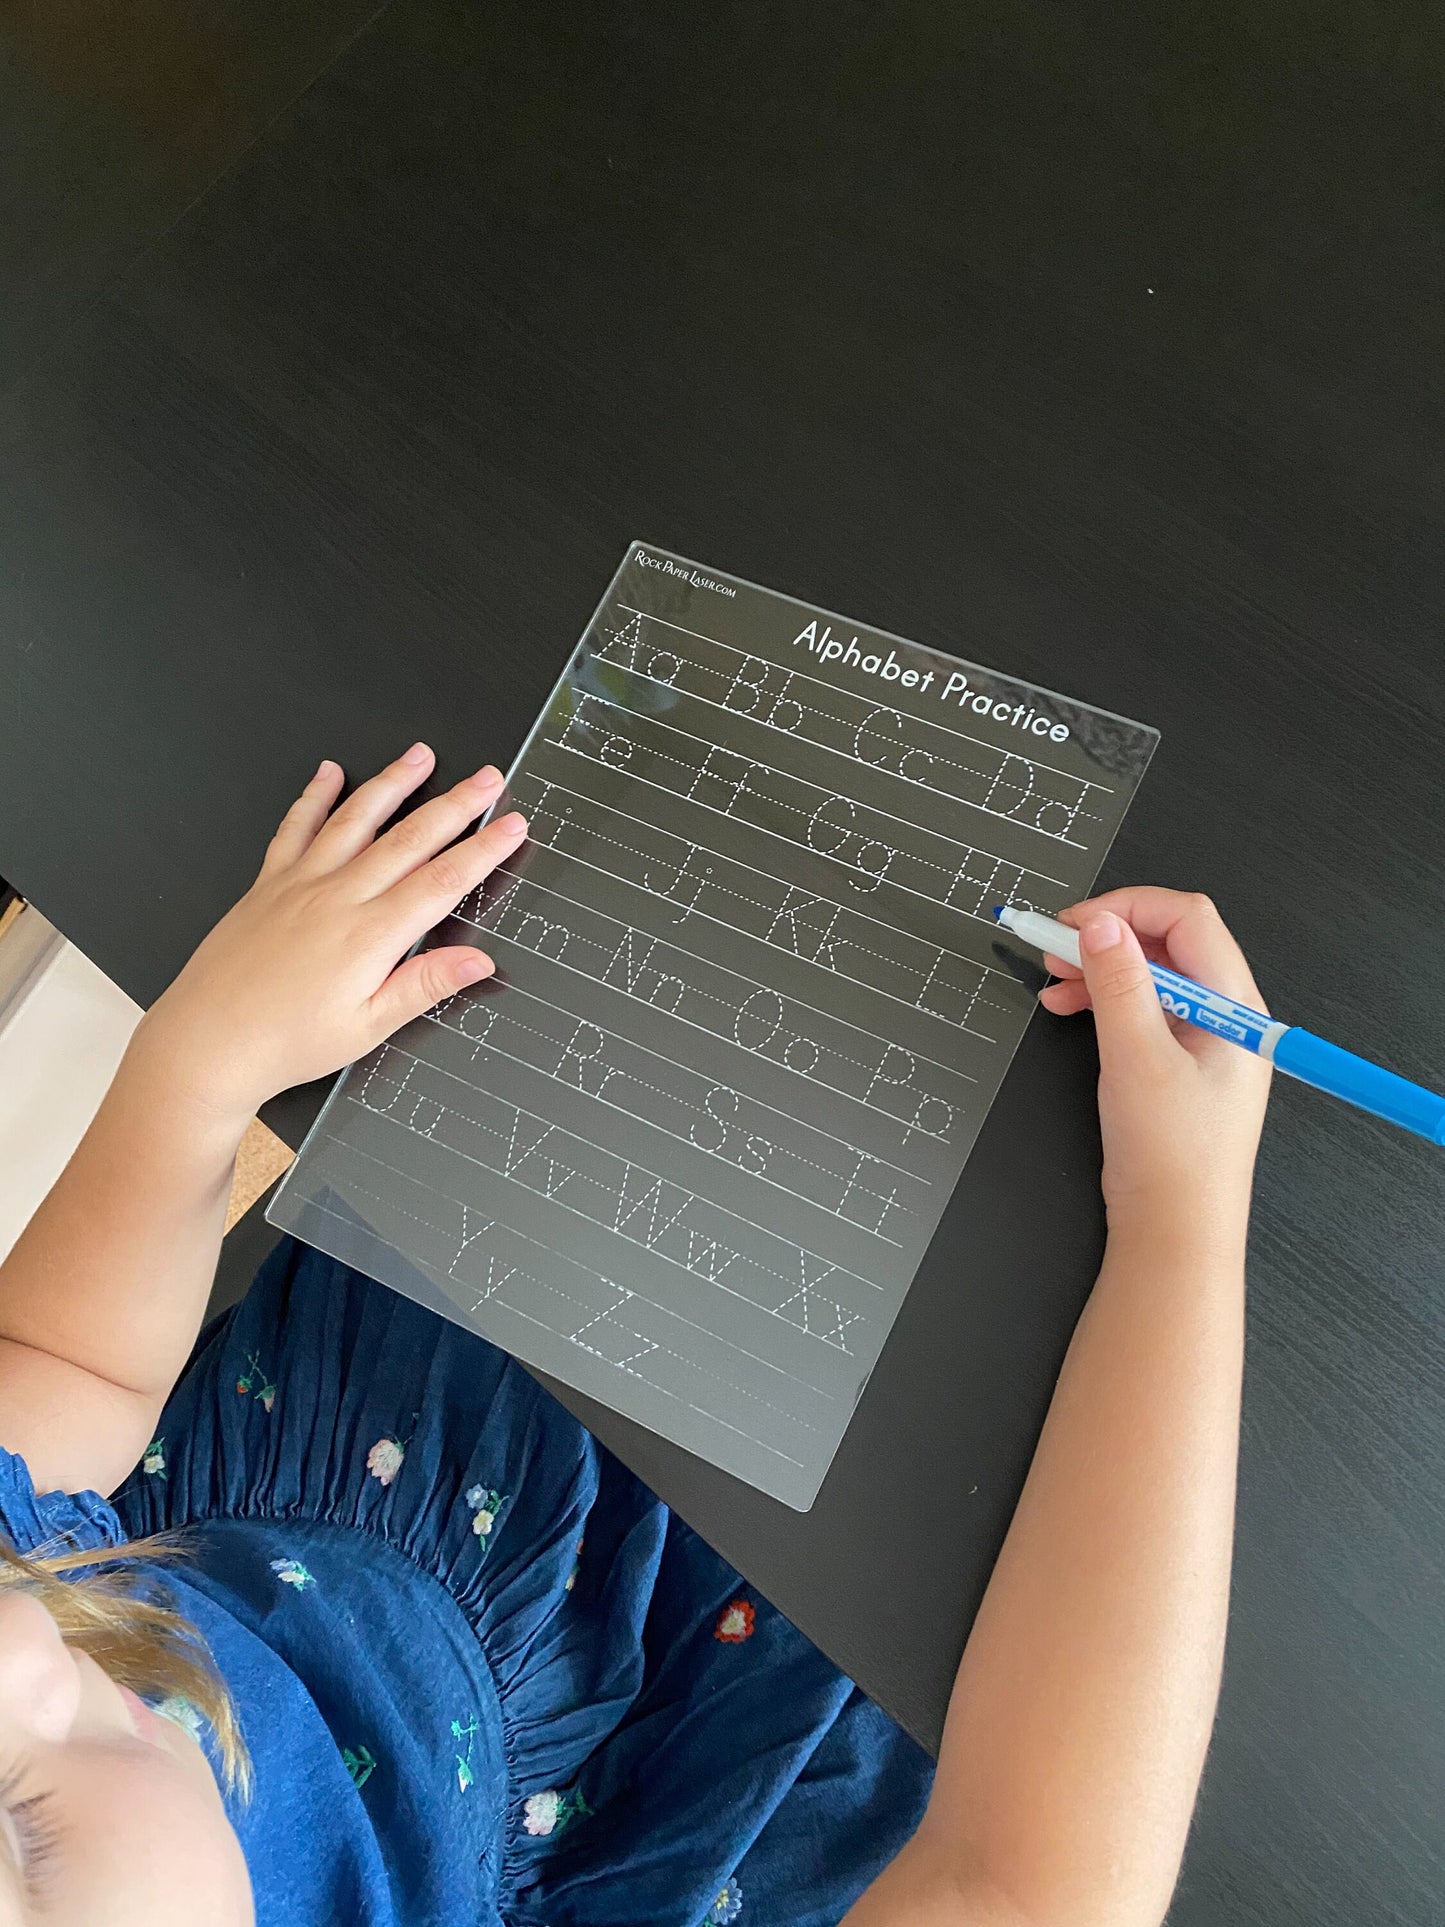 Alphabet Tracing Board - Alphabet Practice Board - Acrylic alphabet board - Acrylic tracing board - Dry Erase Alphabet ABC Tracing Board